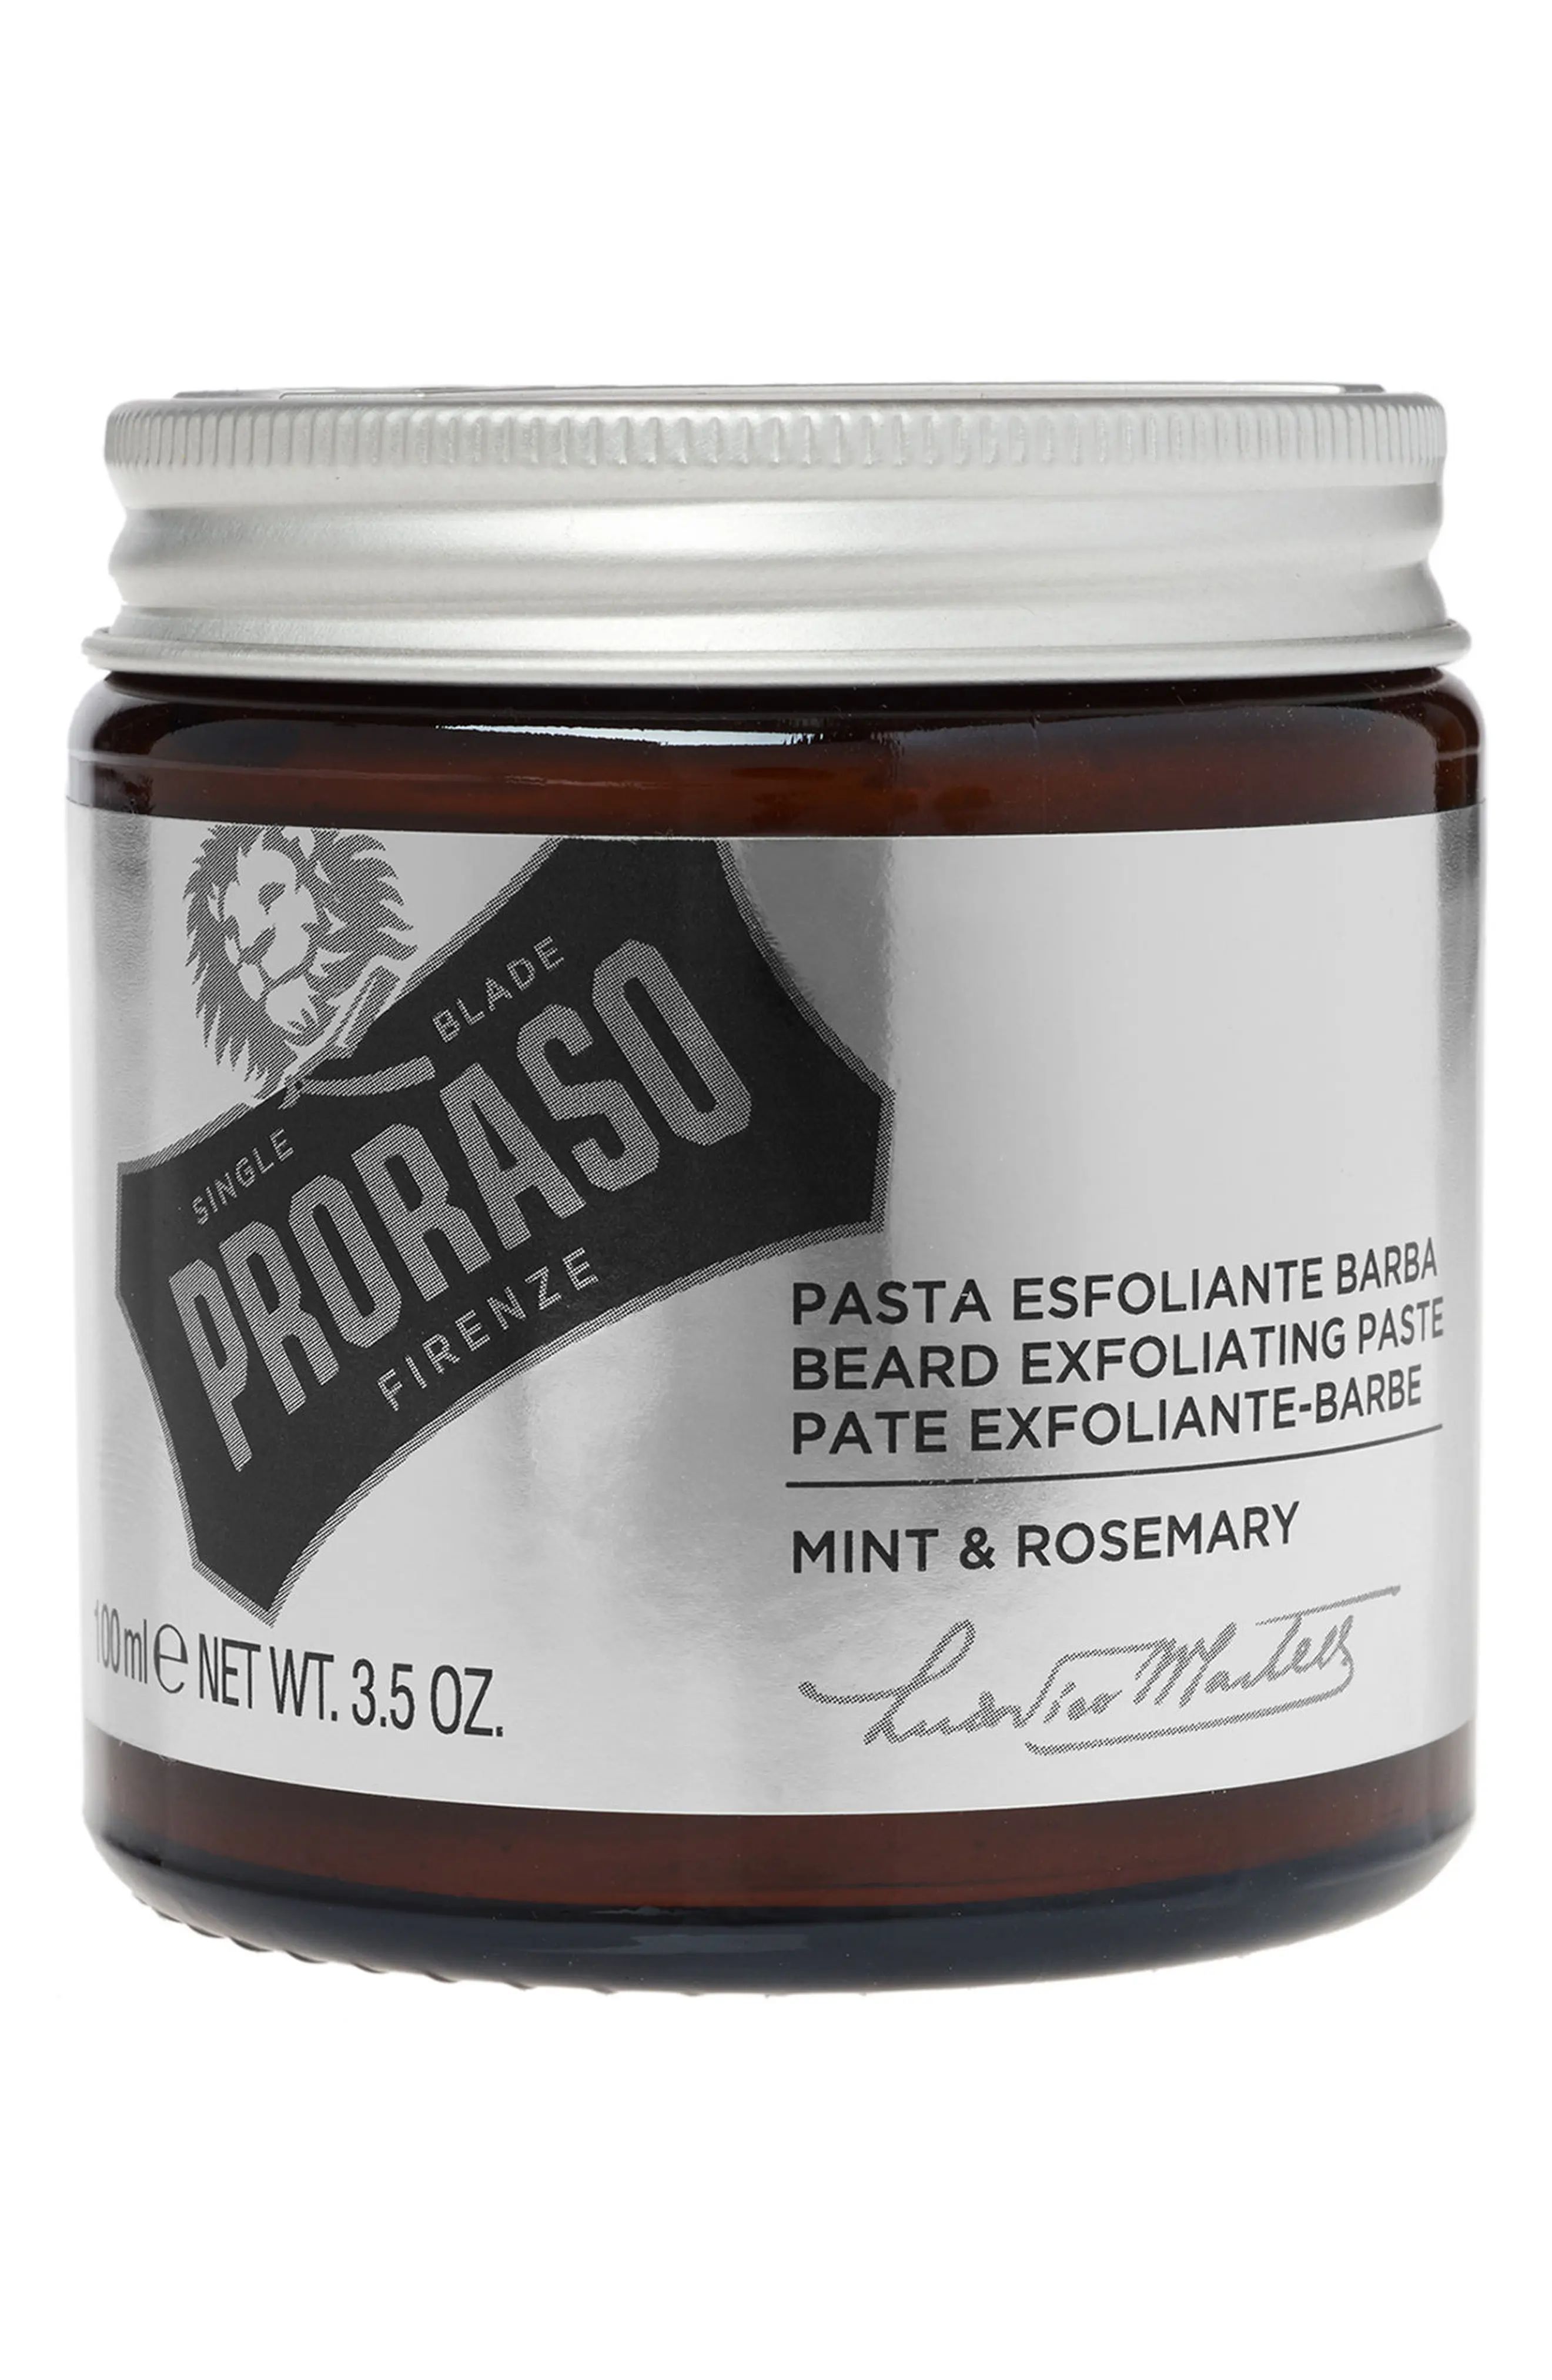 Proraso Men's Grooming Beard Exfoliate Paste at Nordstrom | Nordstrom